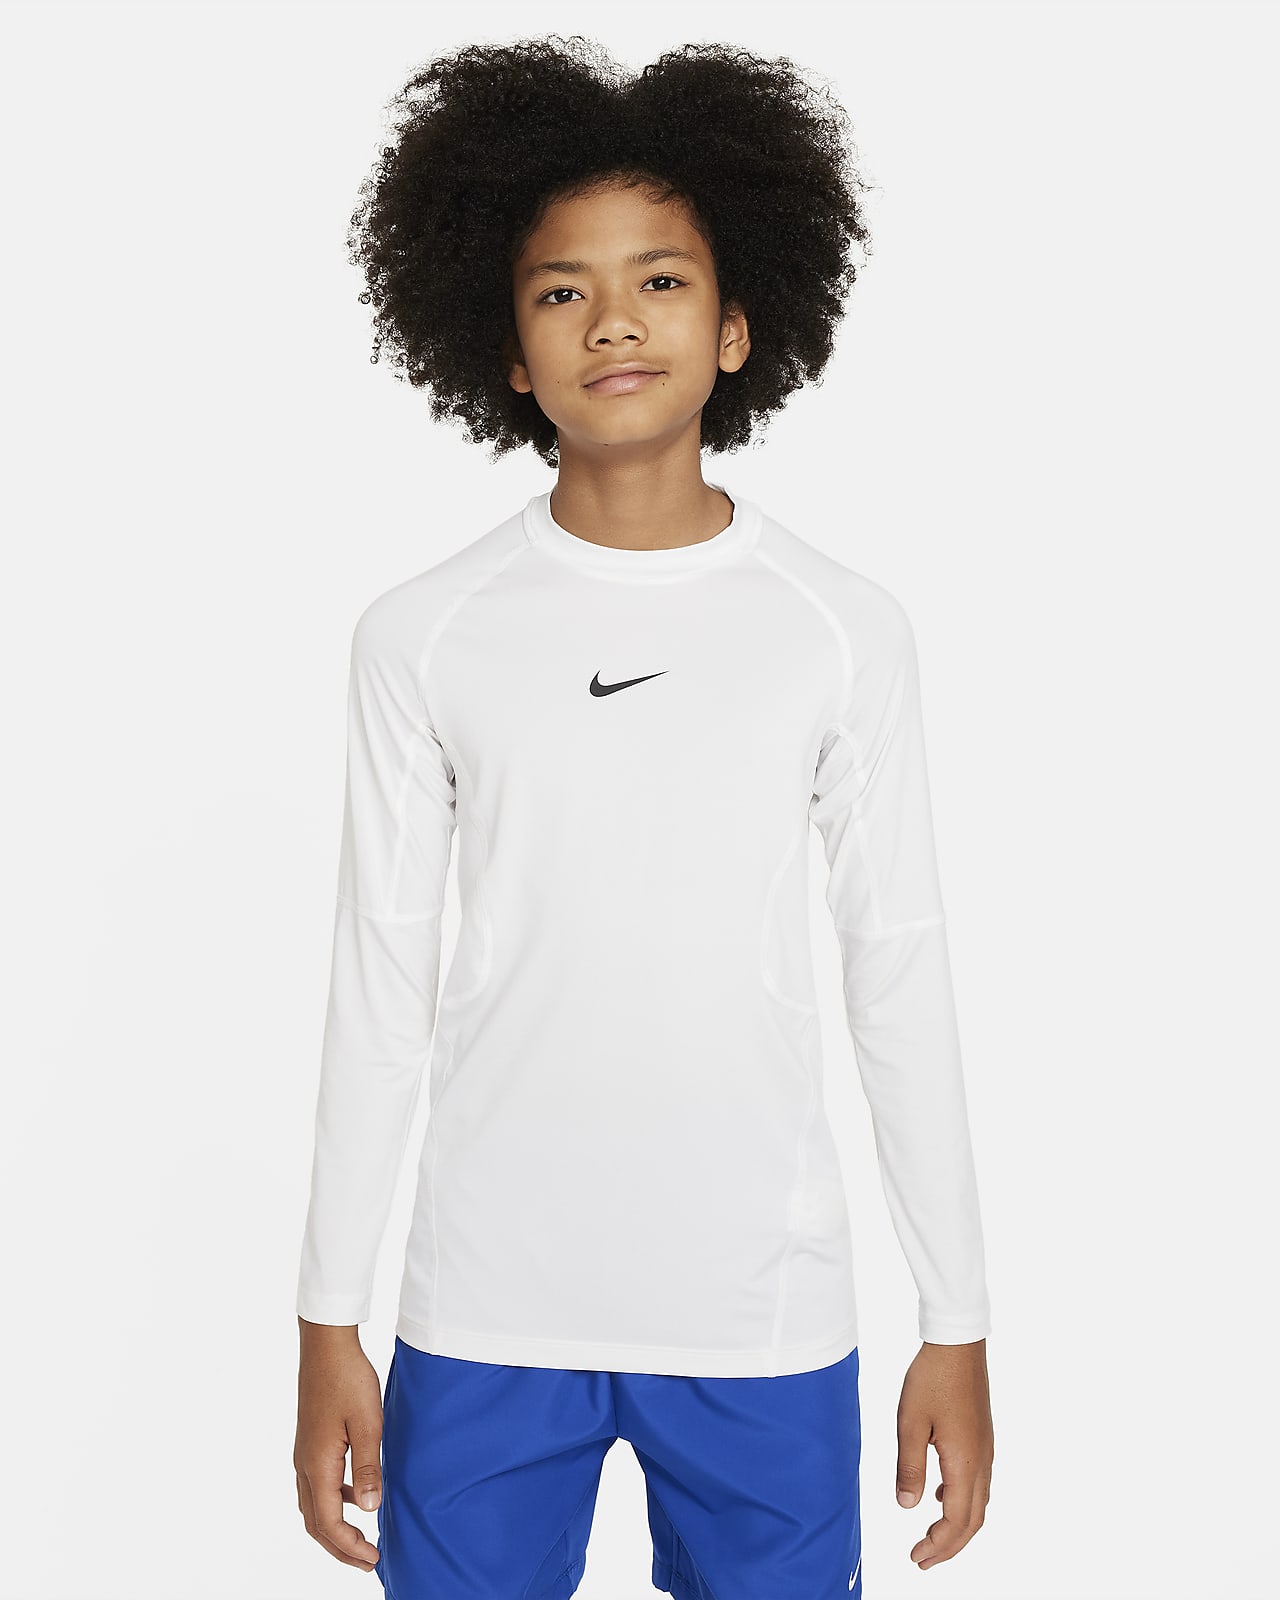 Nike Men's College Navy / White Pro Tight Long-Sleeve T-Shirt